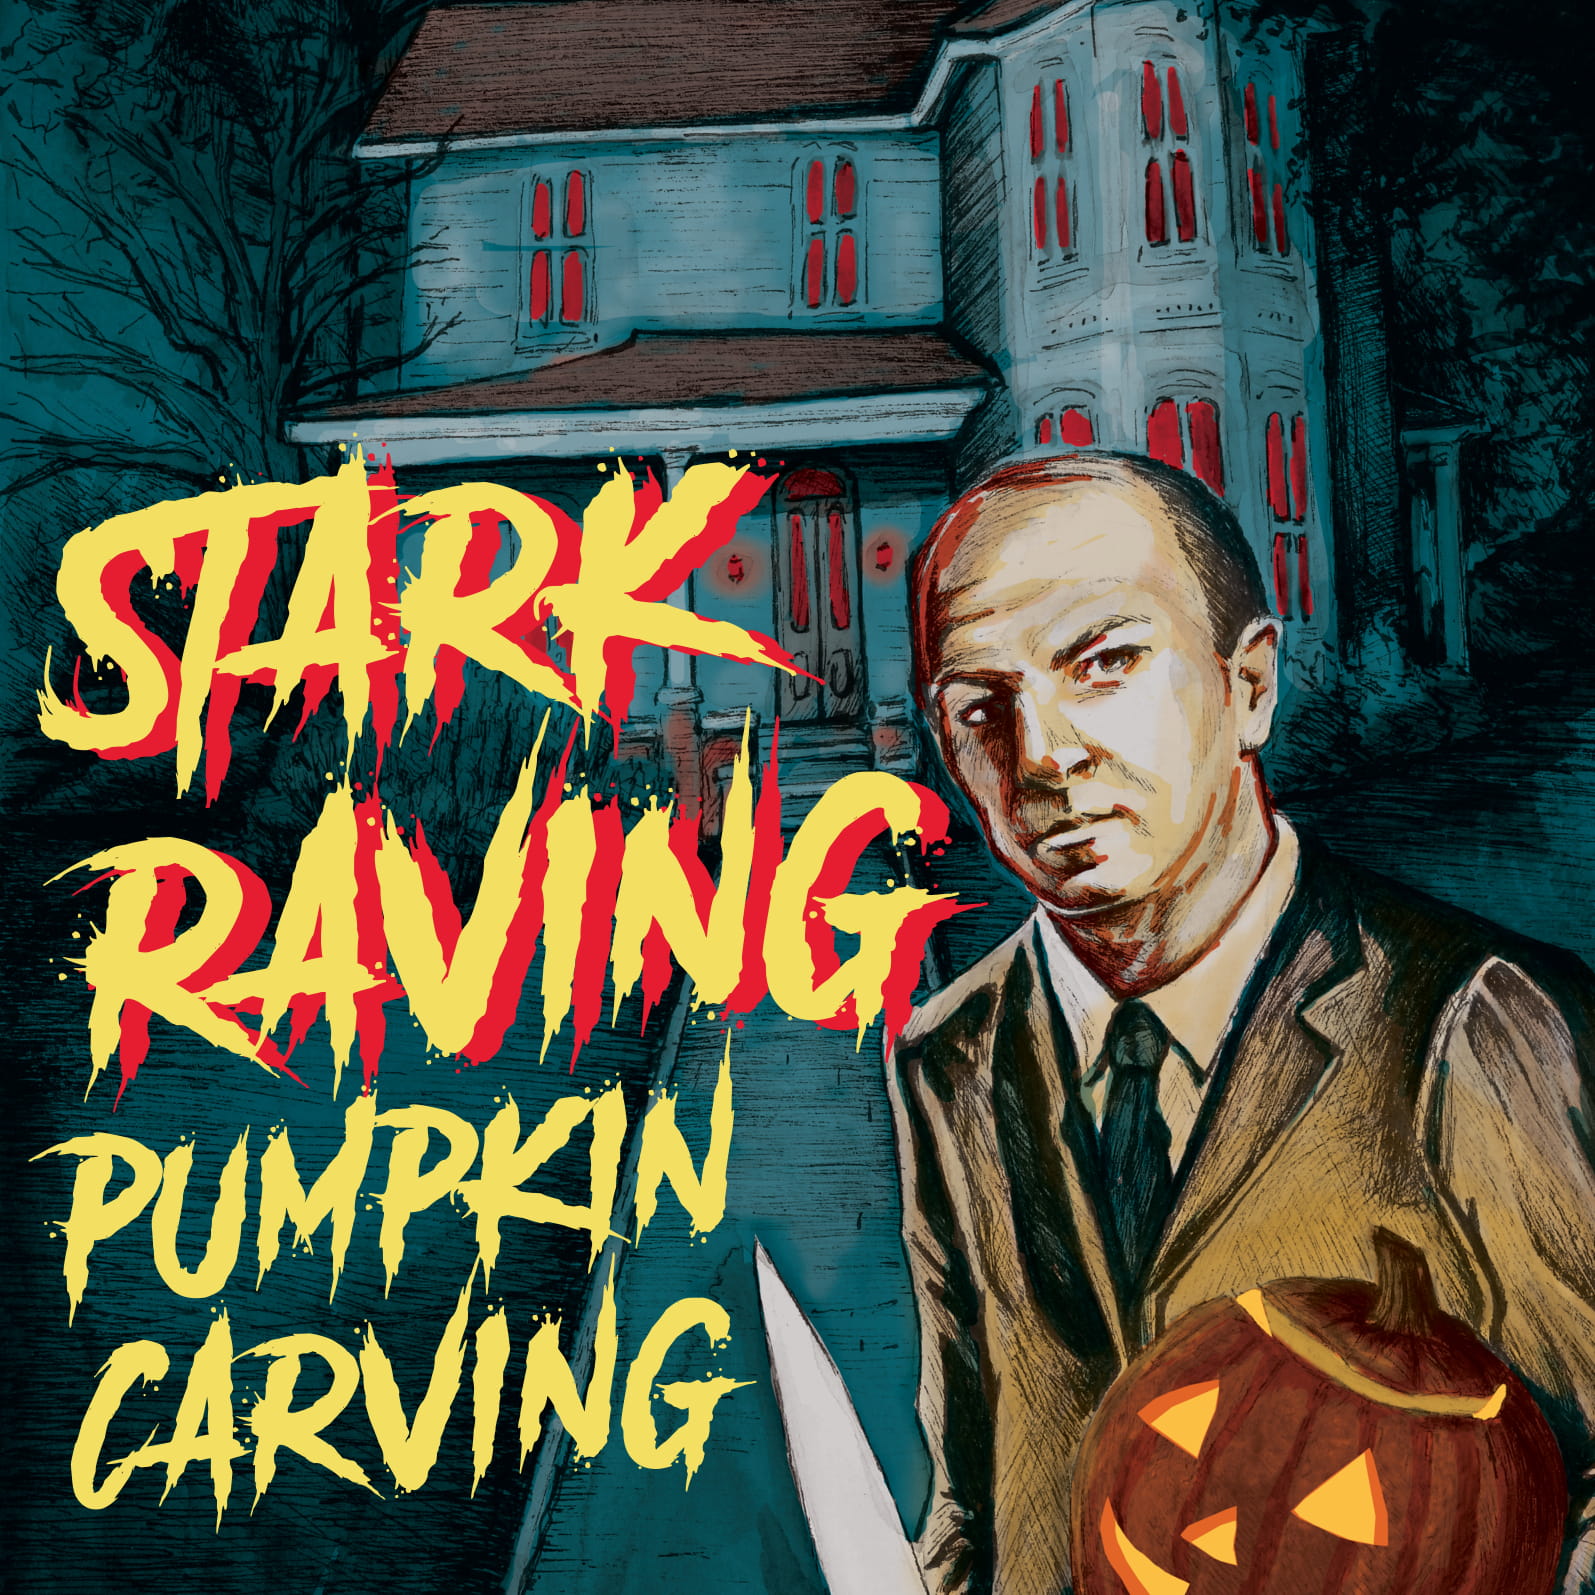 Stark Raving Pumpkin Carving